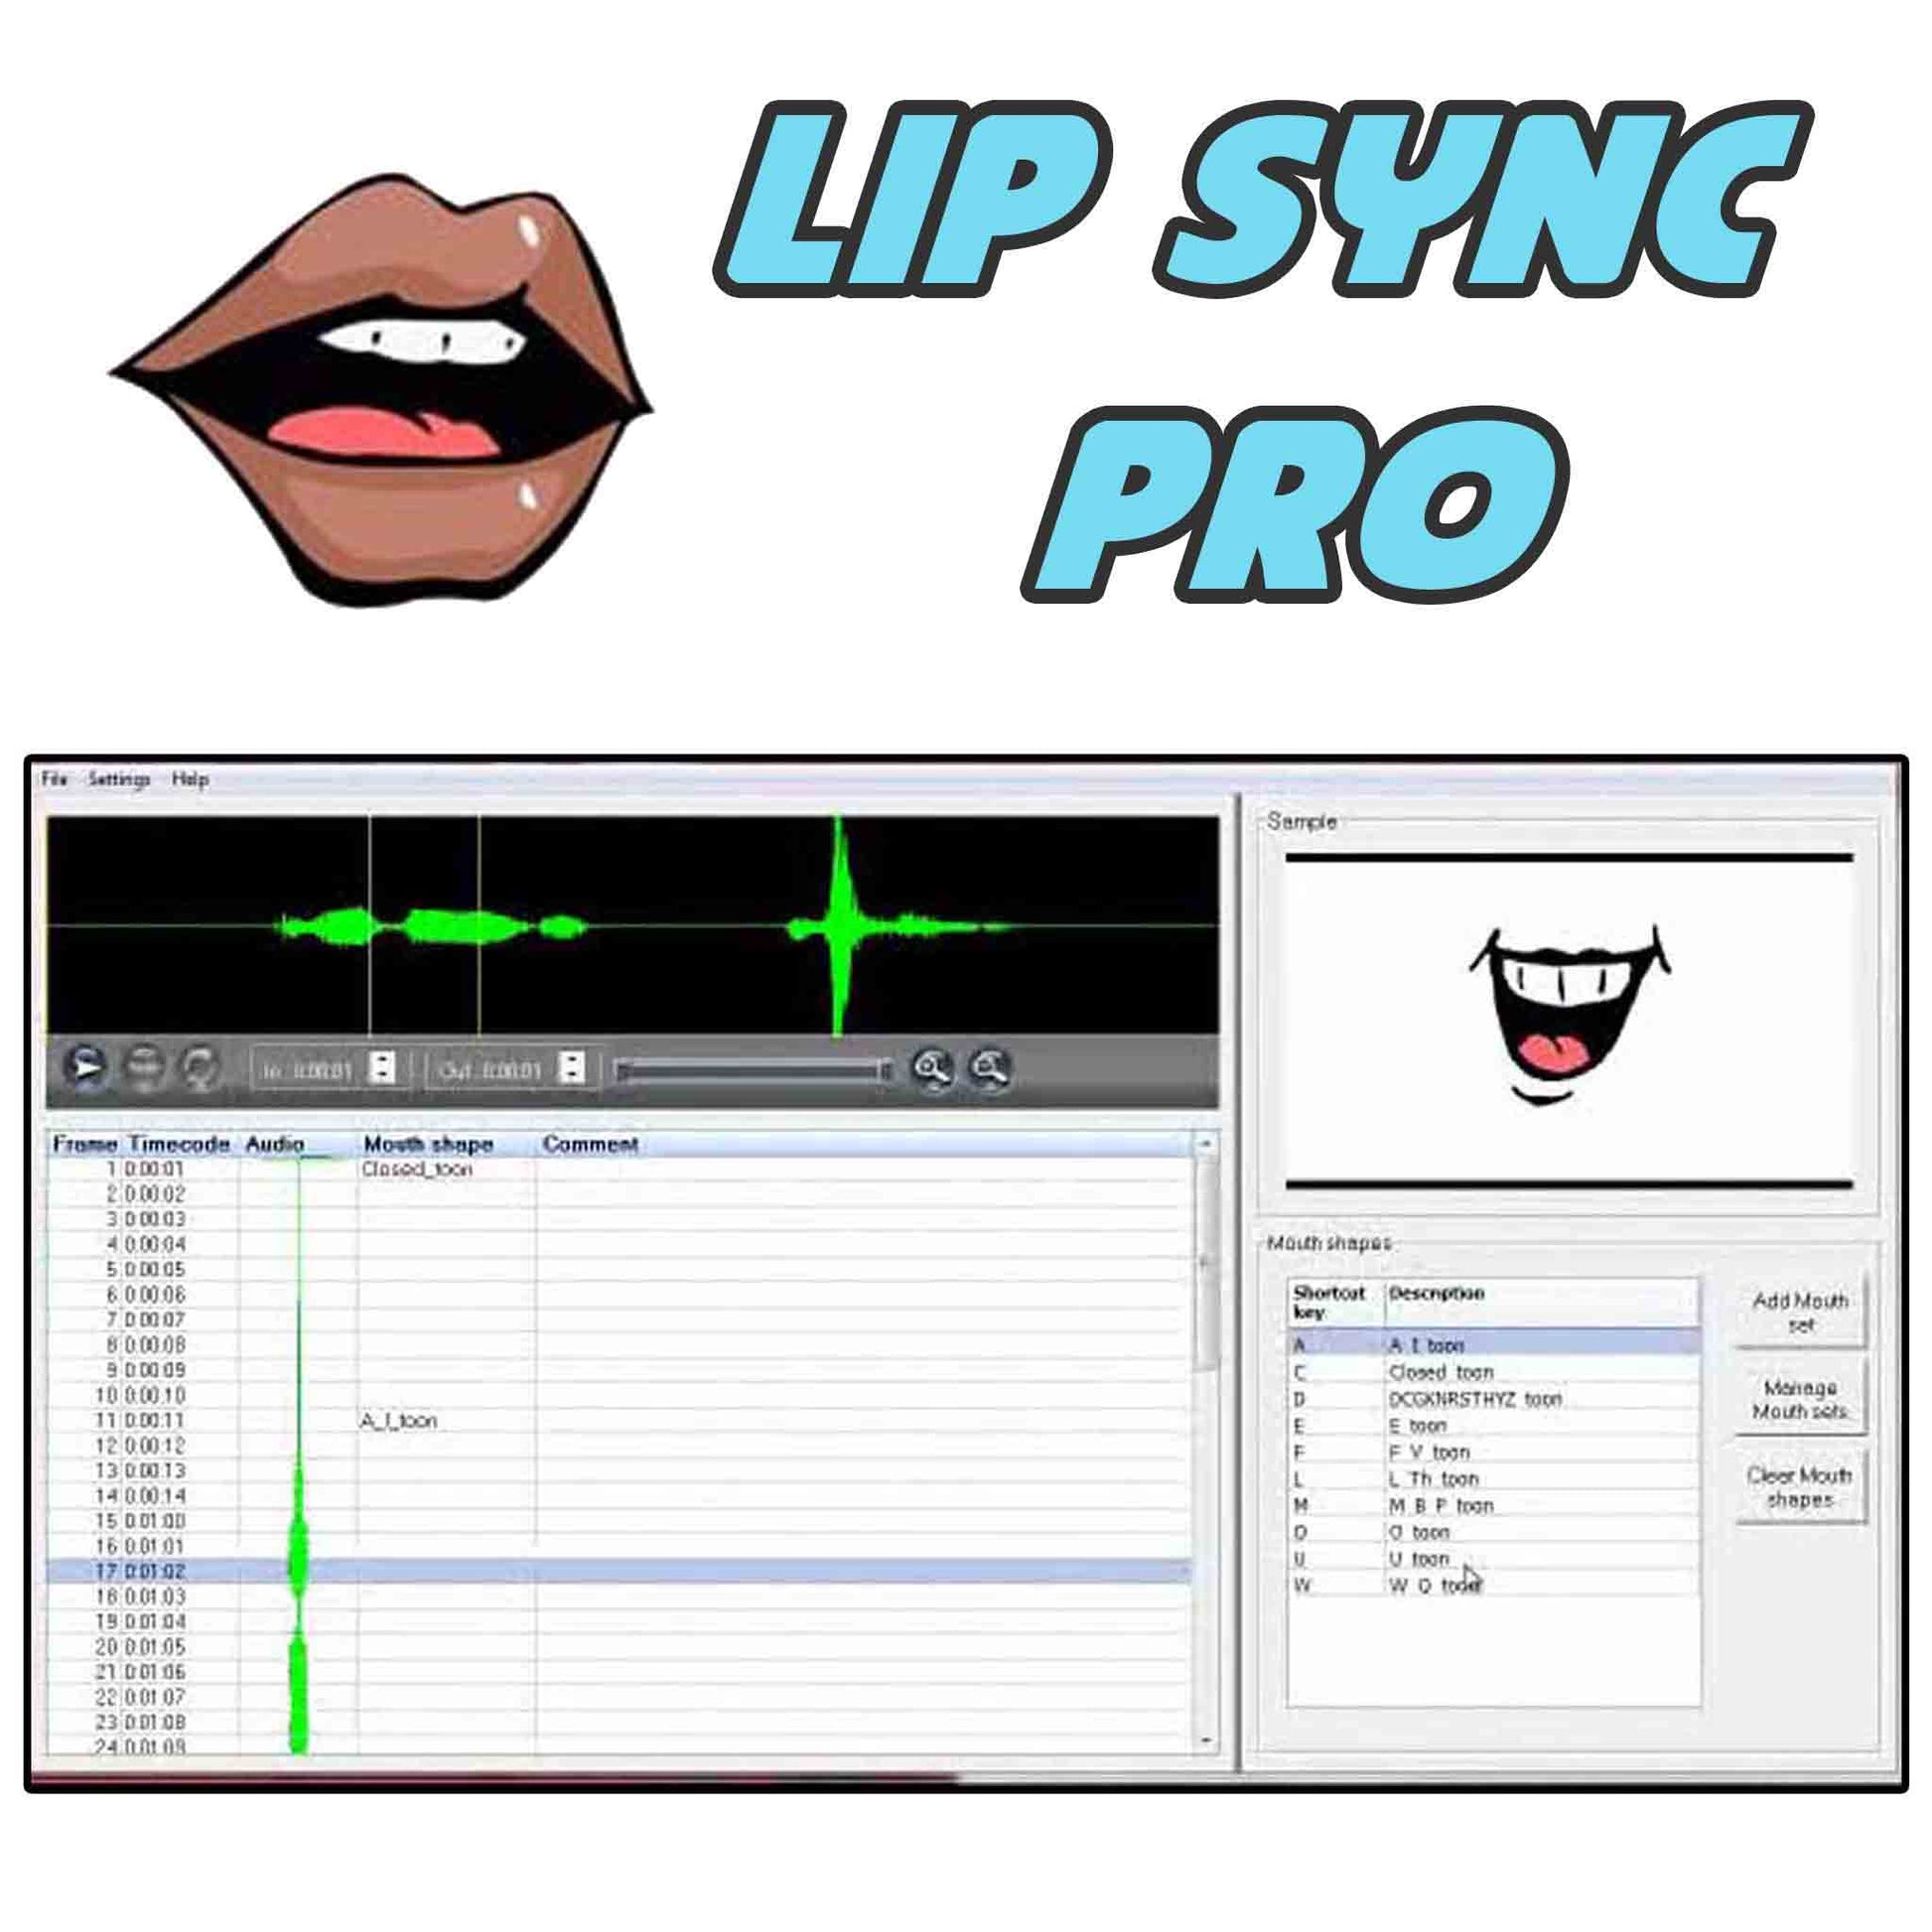 Lip Sync Pro logo and PC computer interface